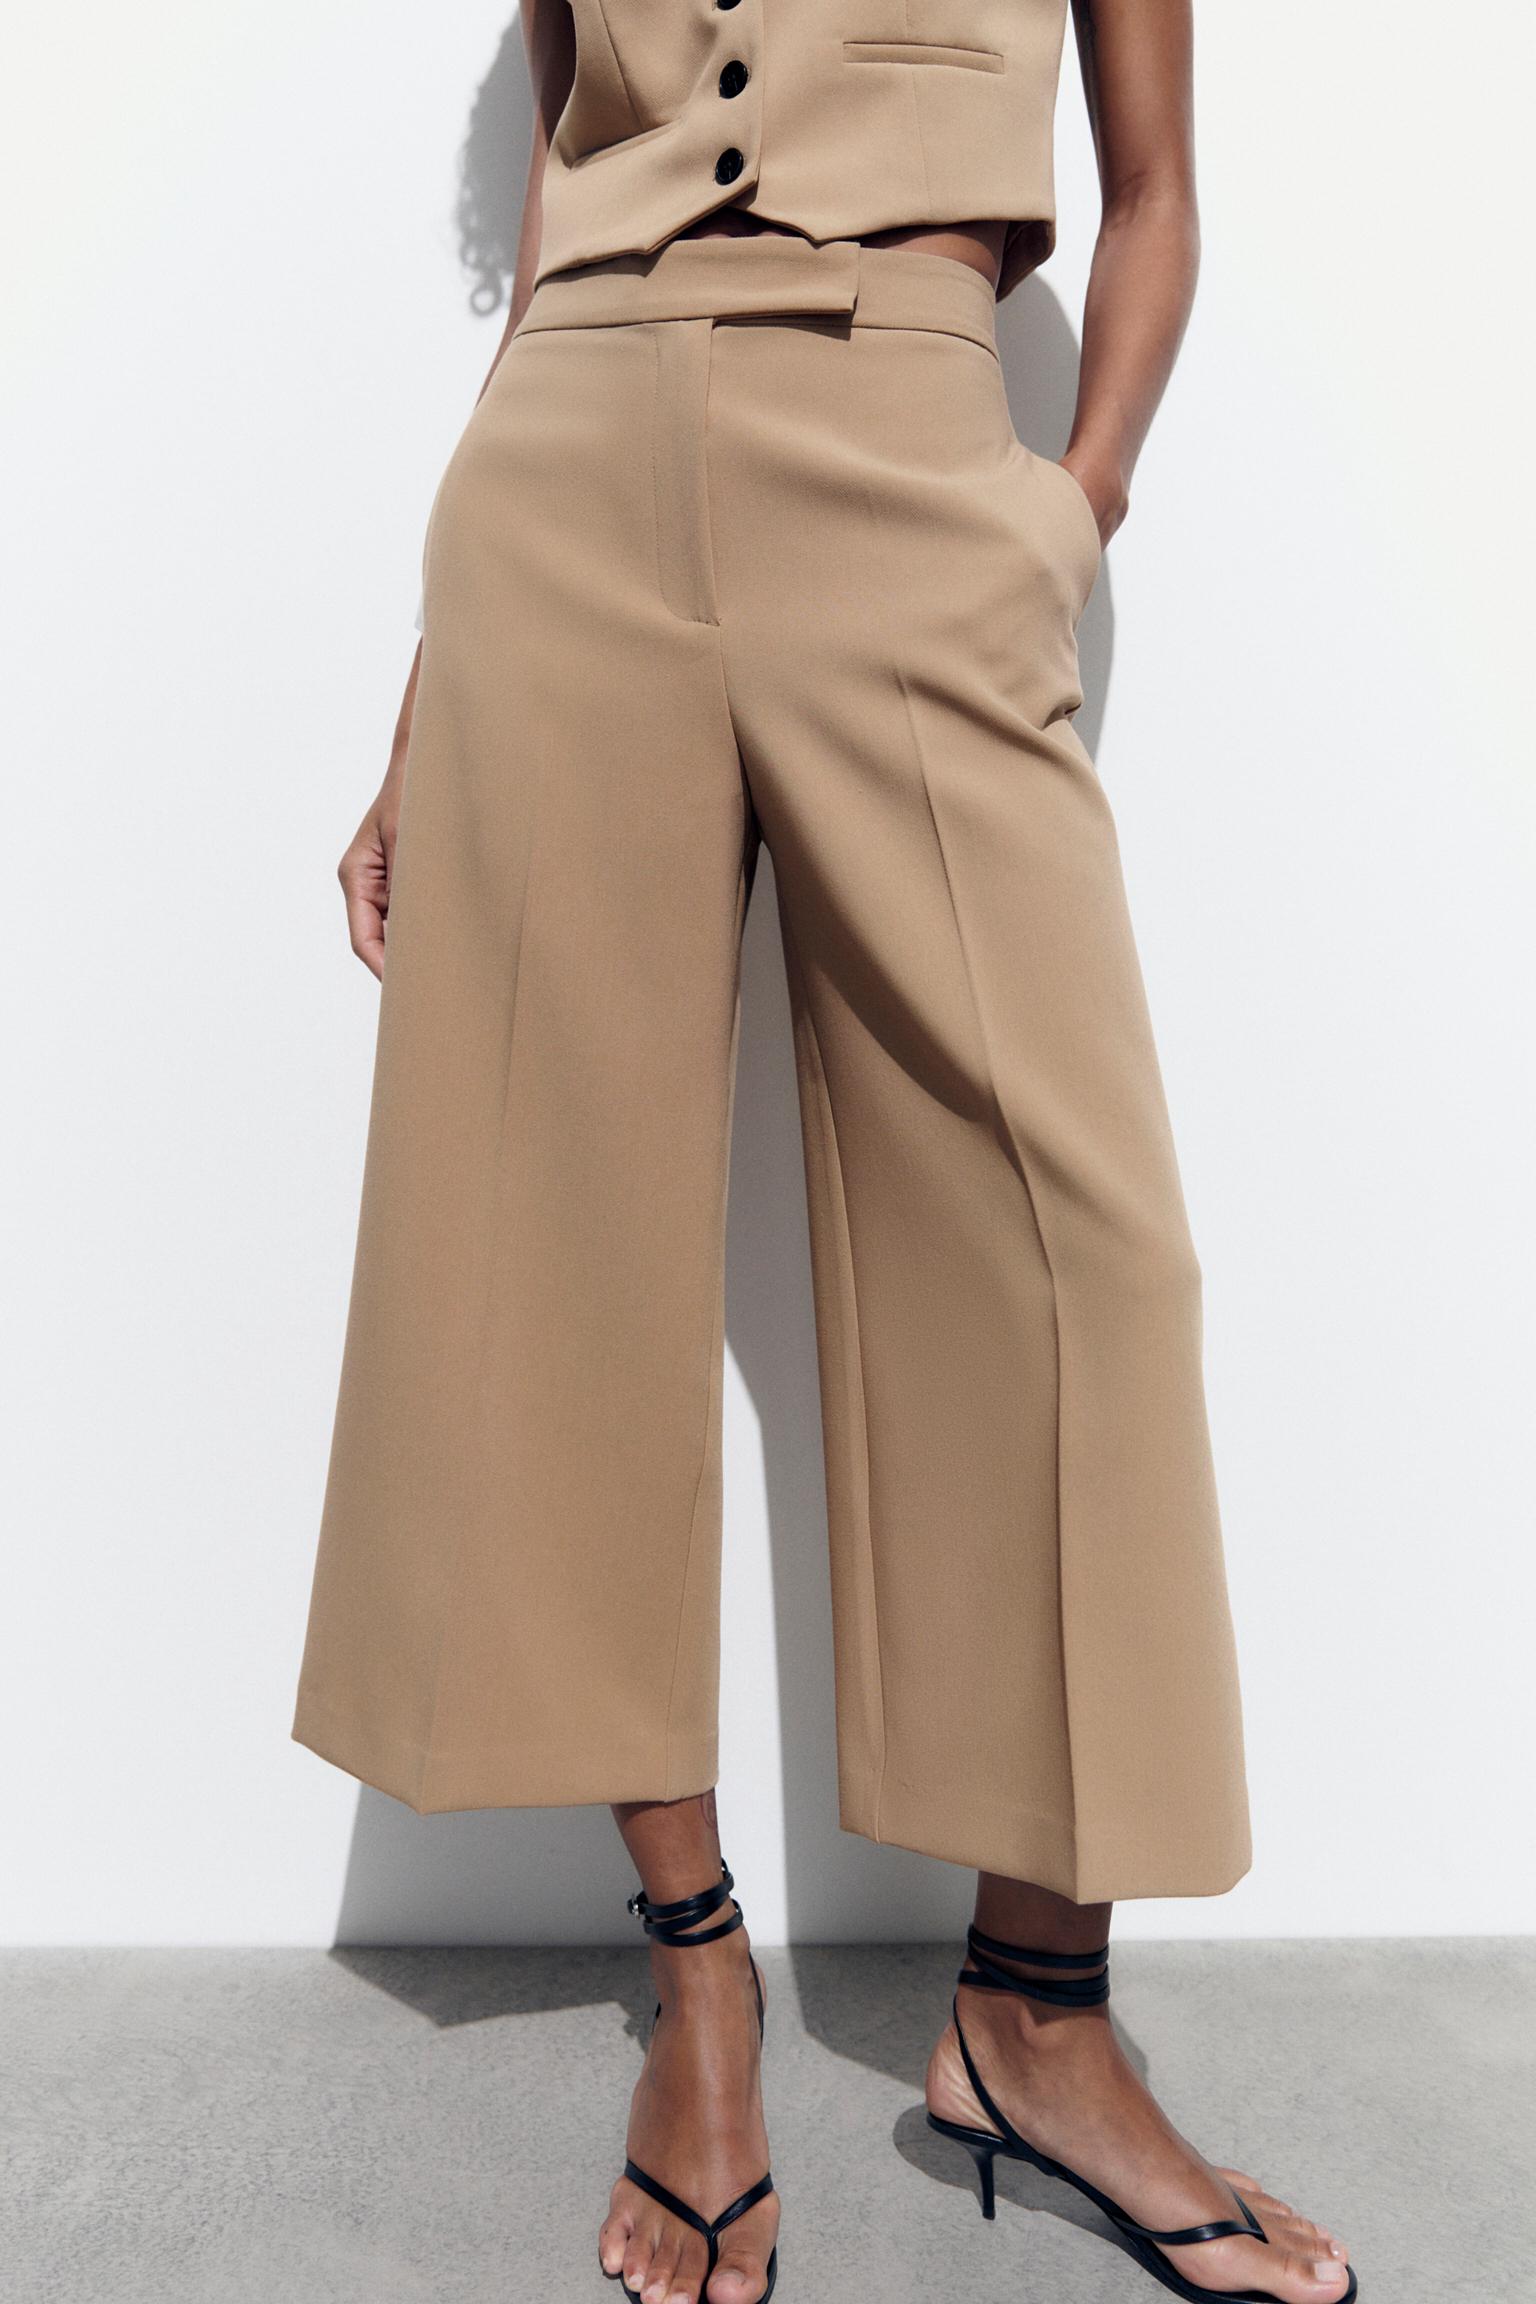 Zara capri pants Size medium 80% lyocell 20% - Depop